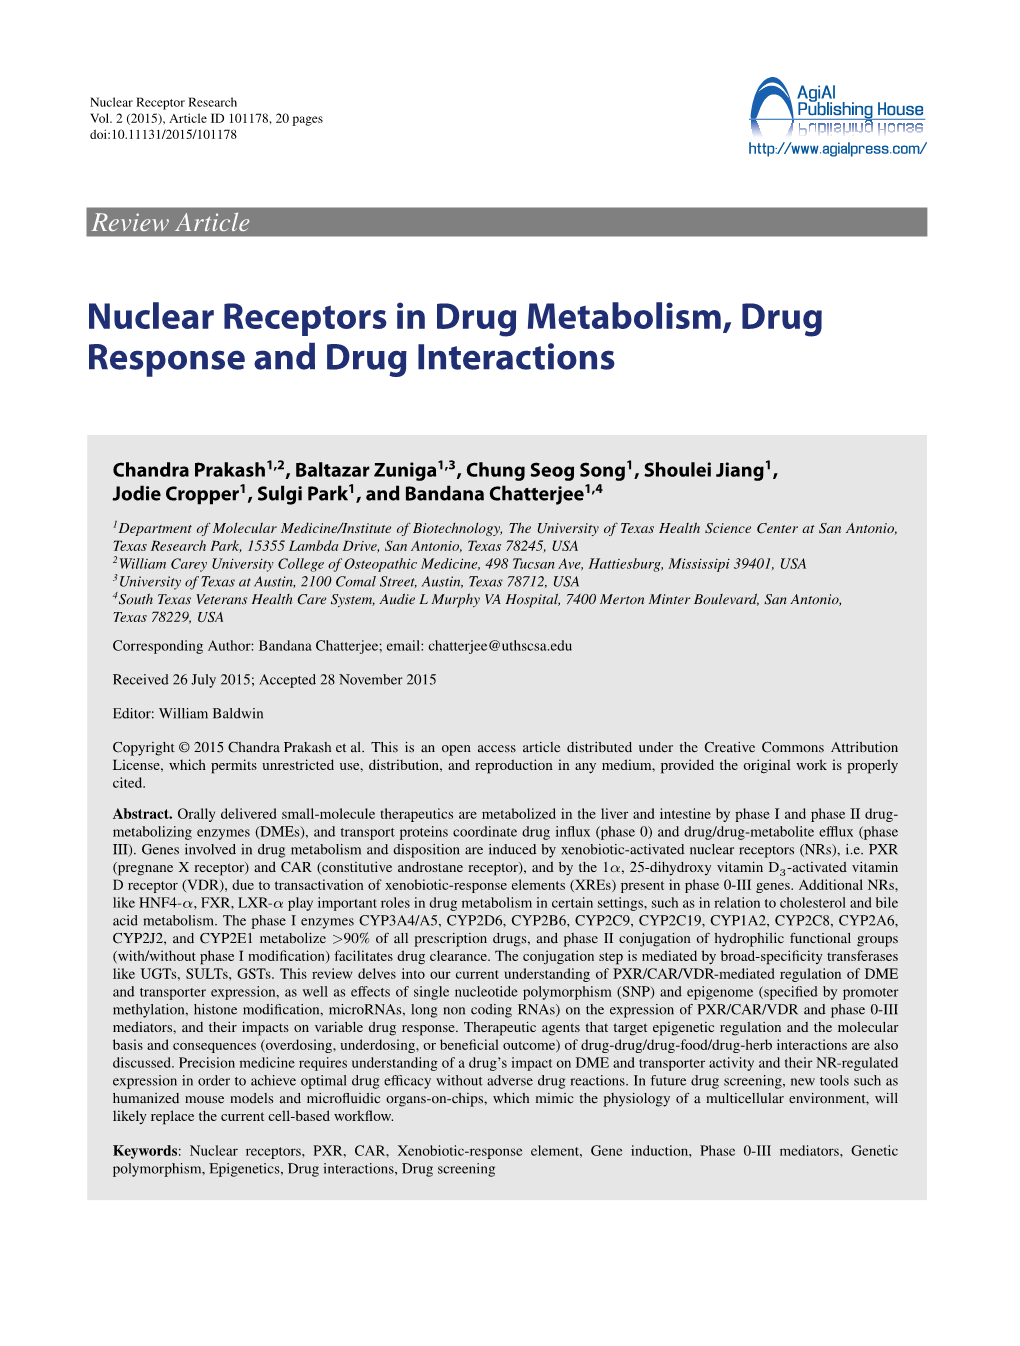 Nuclear Receptors in Drug Metabolism, Drug Response and Drug Interactions